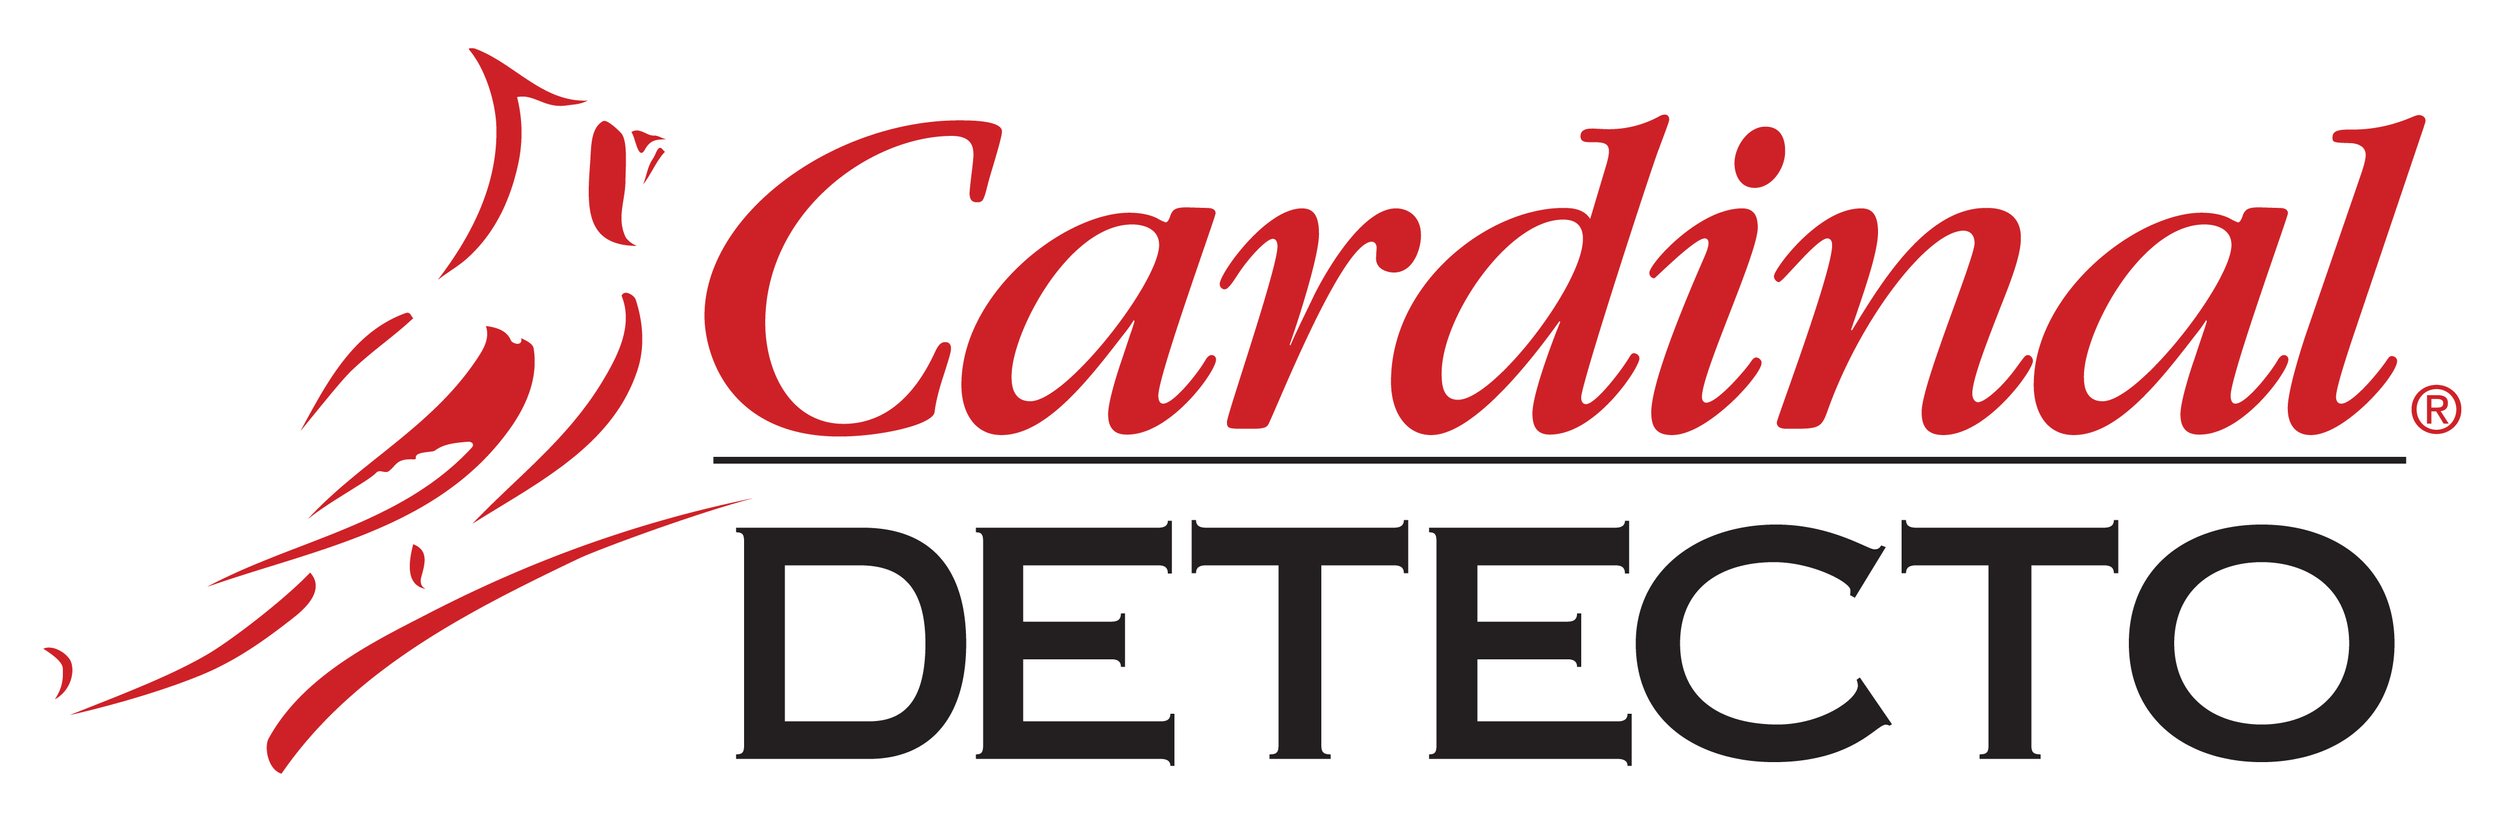 Cardinal-Detecto_Logo.jpeg